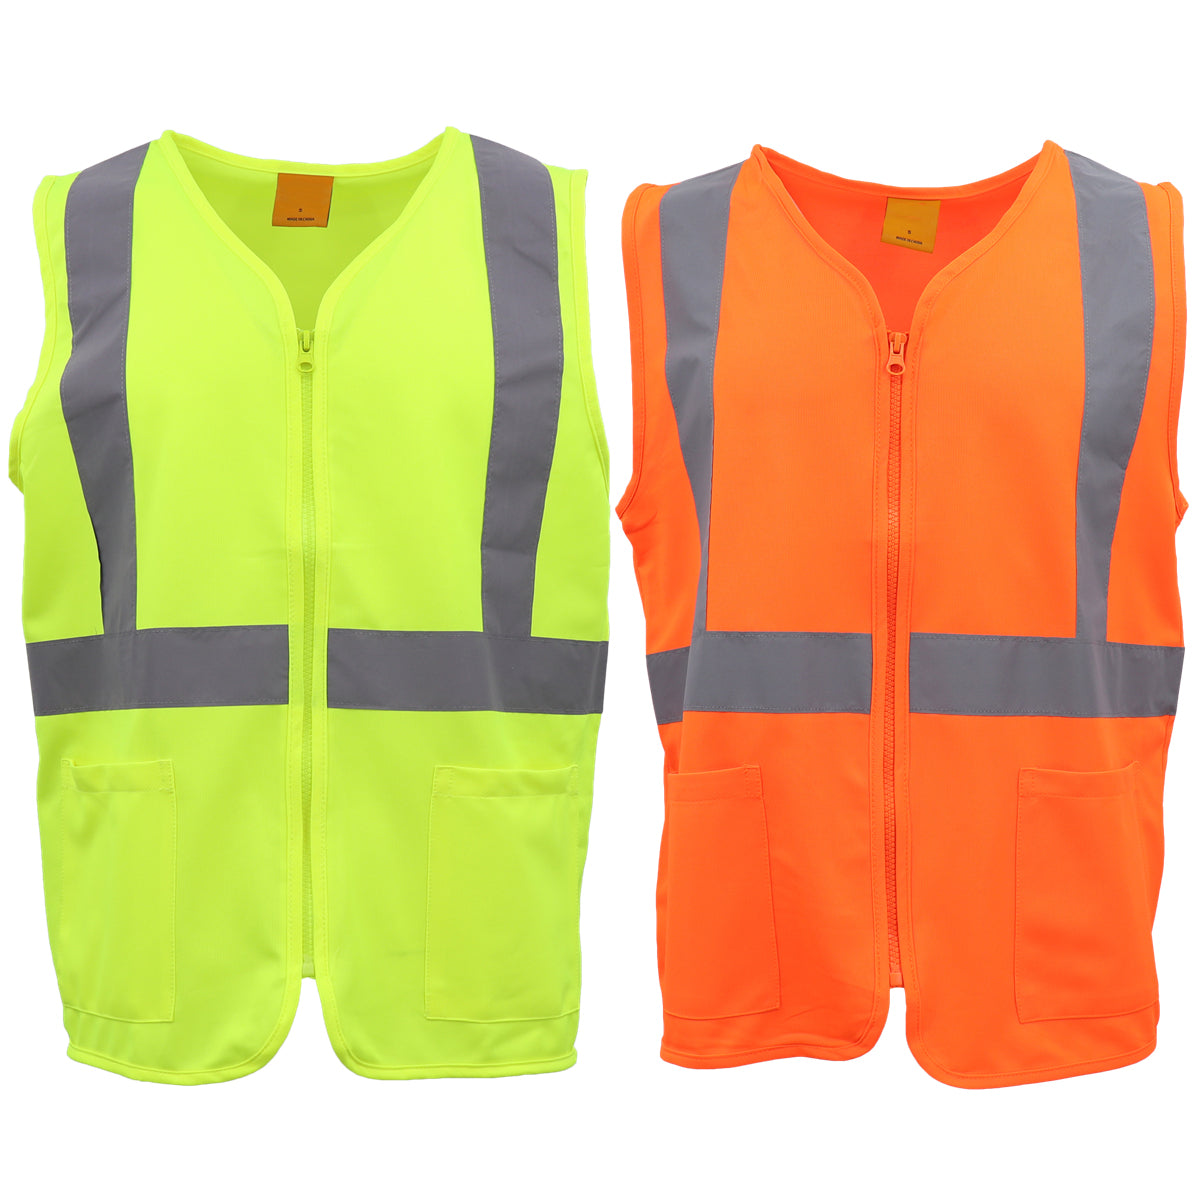 HI VIS Safety Zip Up Vest Workwear Reflective Tape Pocket Day Night Visibility - Zmart Australia